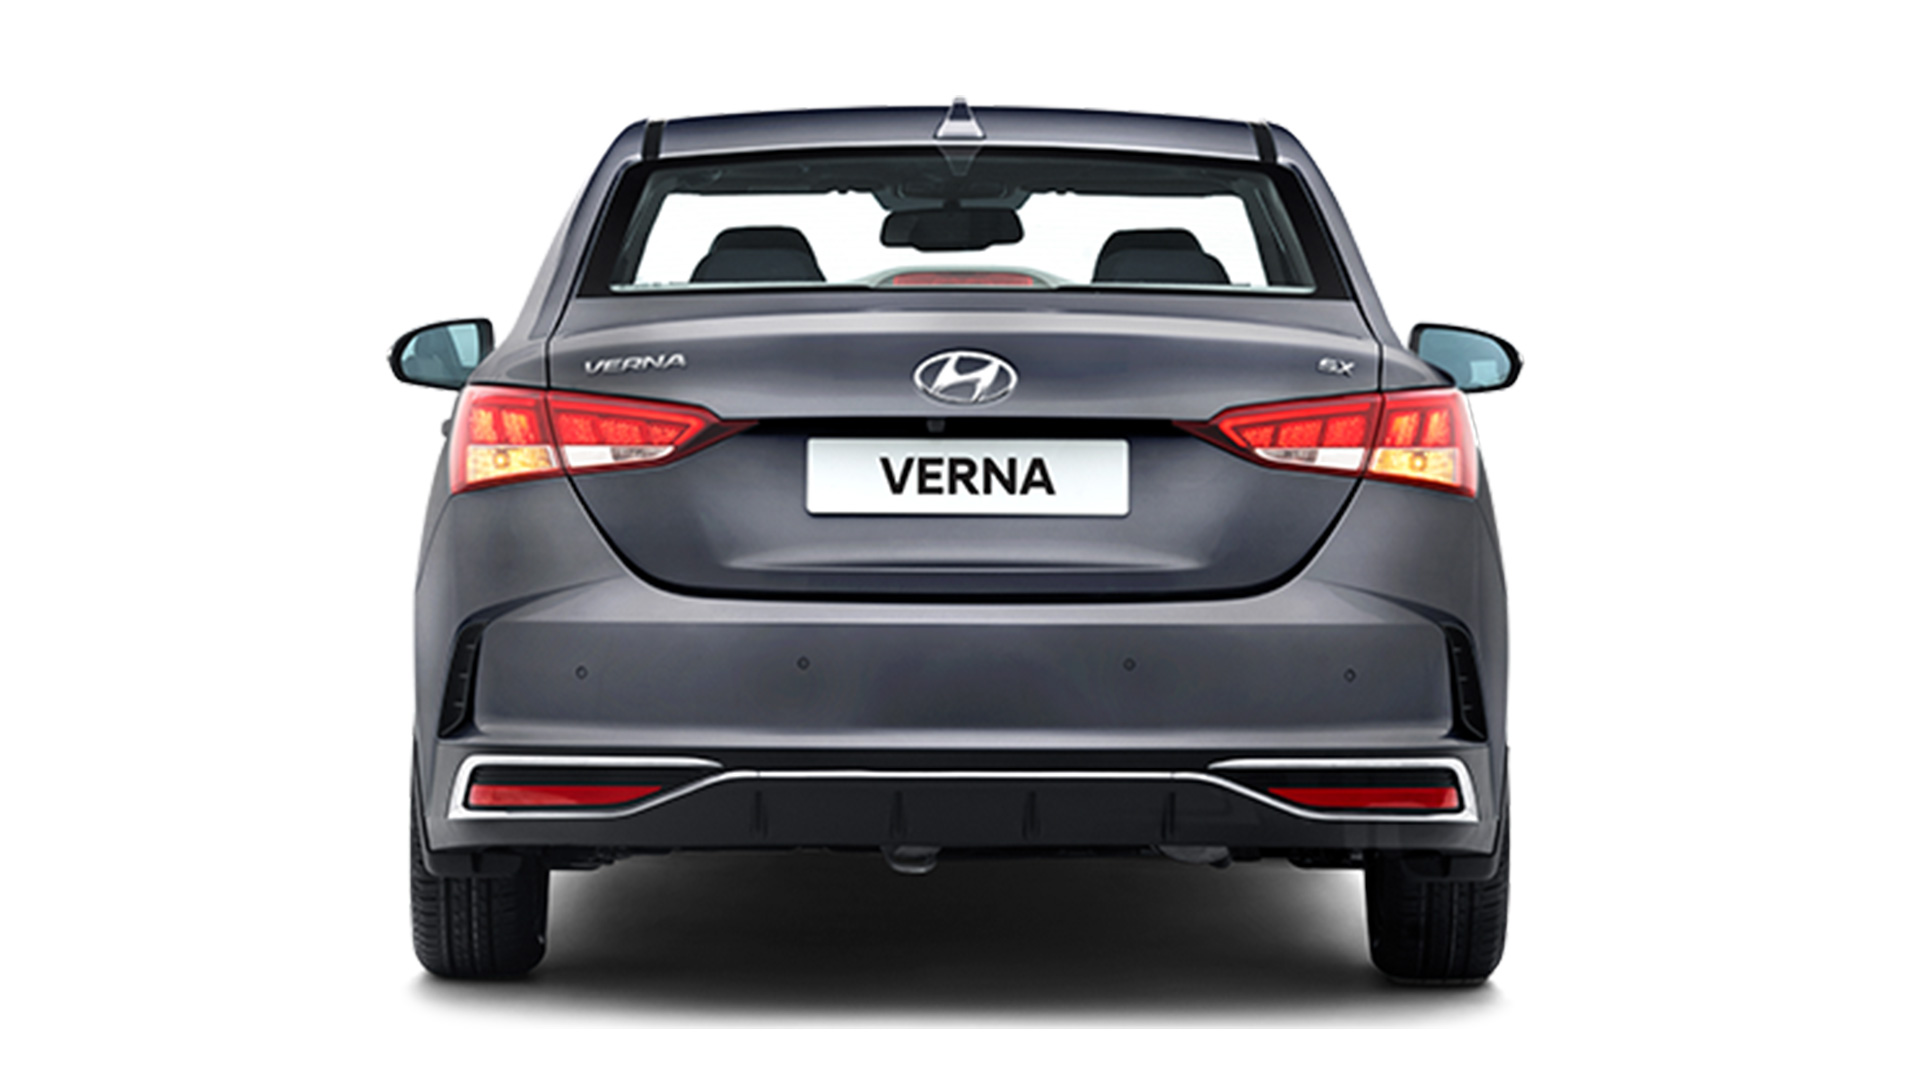 Hyundai Verna 2020 Base Model Price